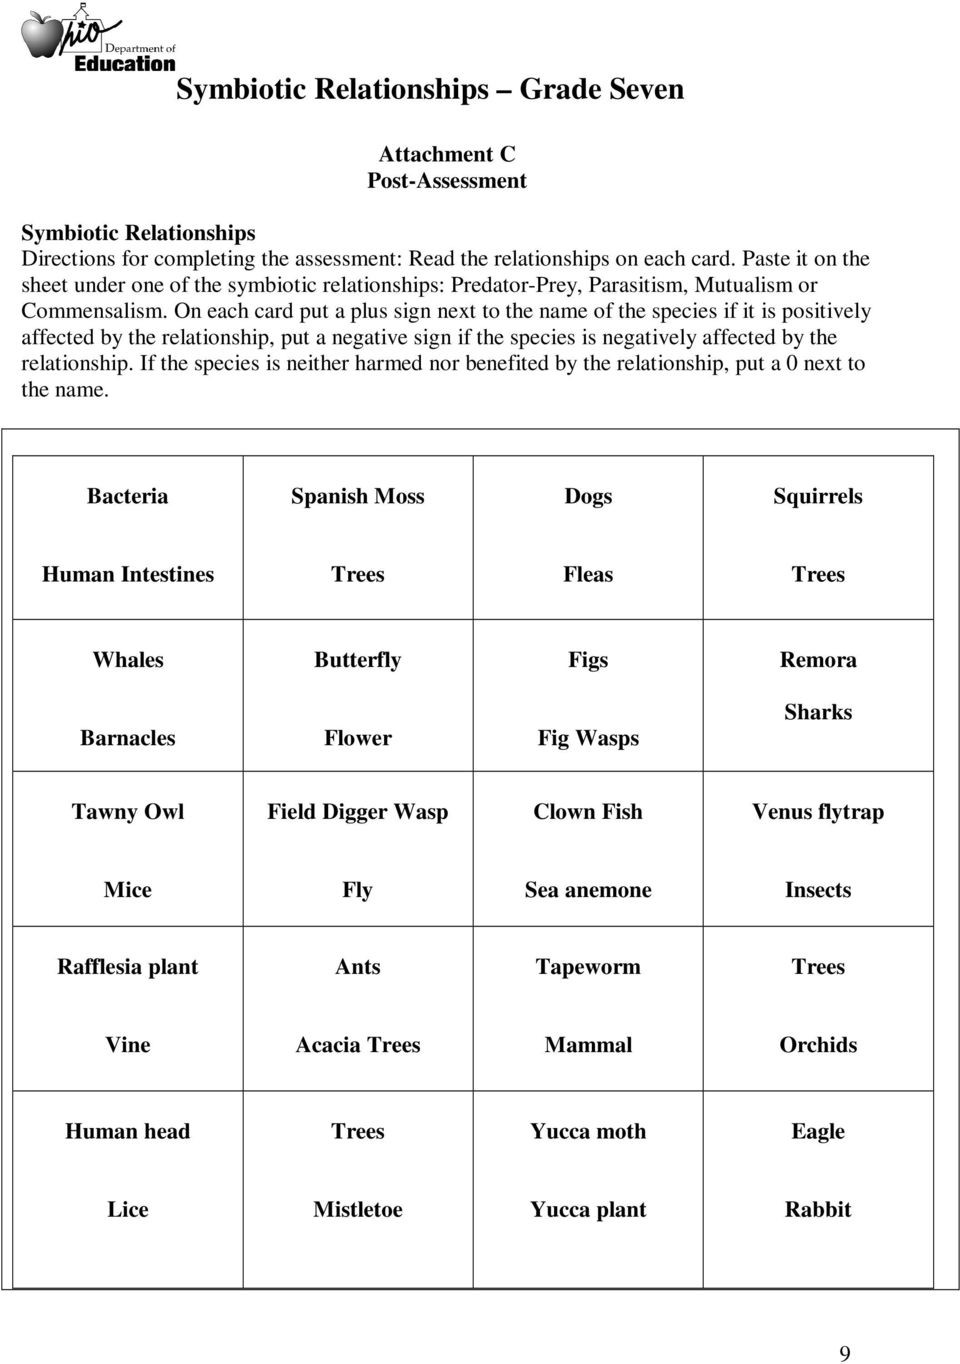 Symbiotic Relationships Worksheet Answers Symbiotic Relationships Grade Seven Pdf Free Download